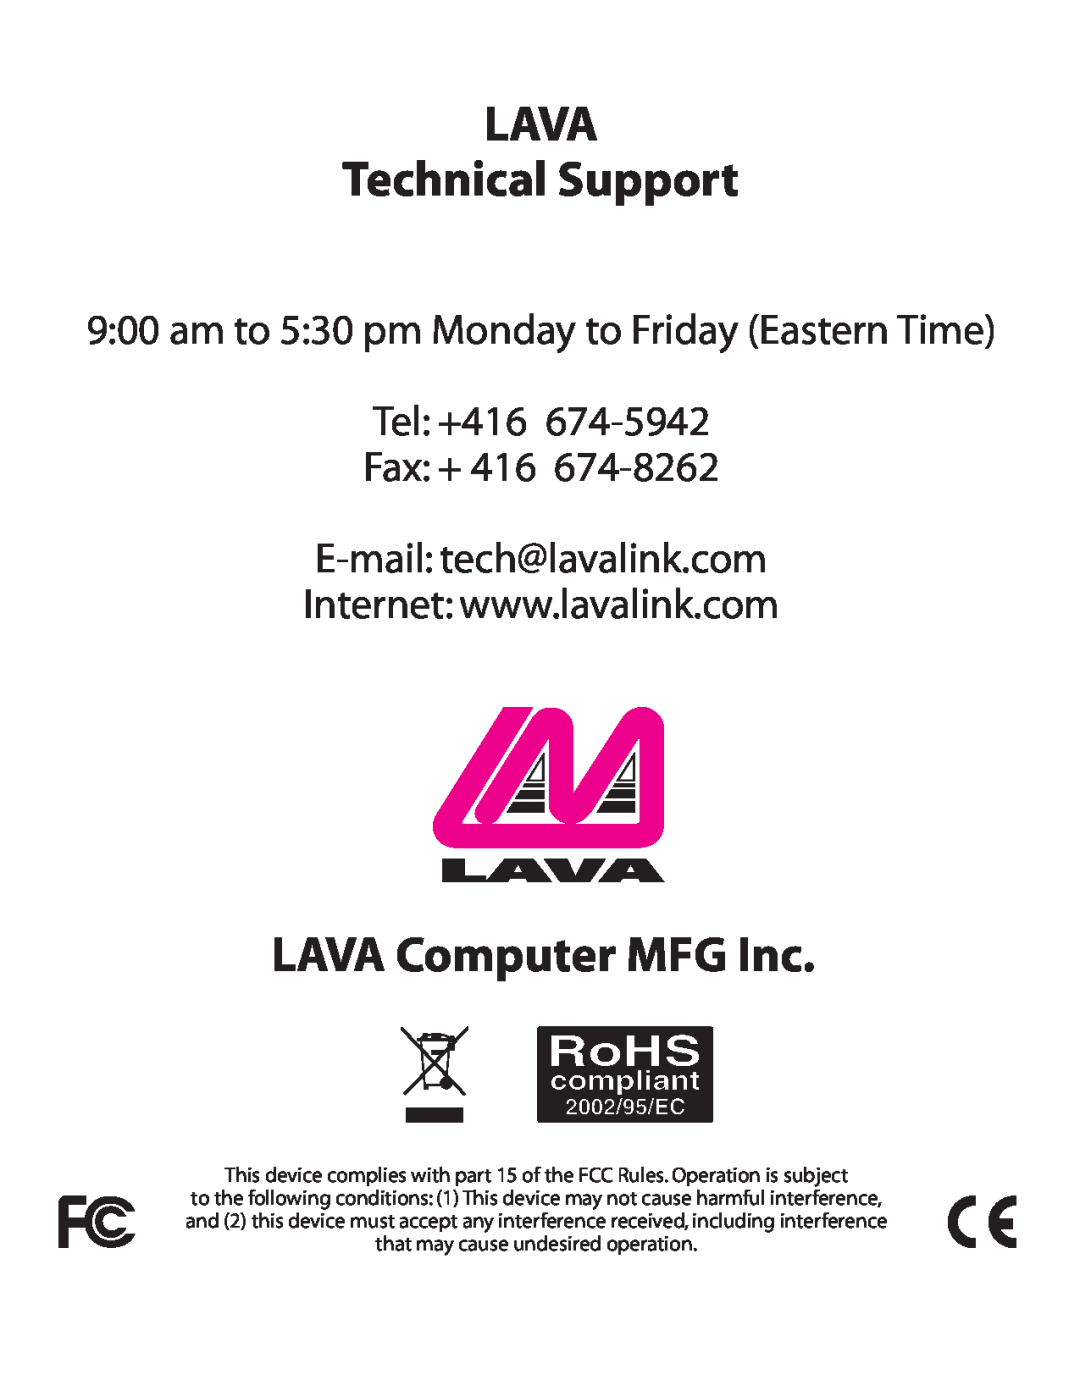 Lava Computer 2SP-550 manual LAVA Technical Support, LAVA Computer MFG Inc, E-mail tech@lavalink.com 